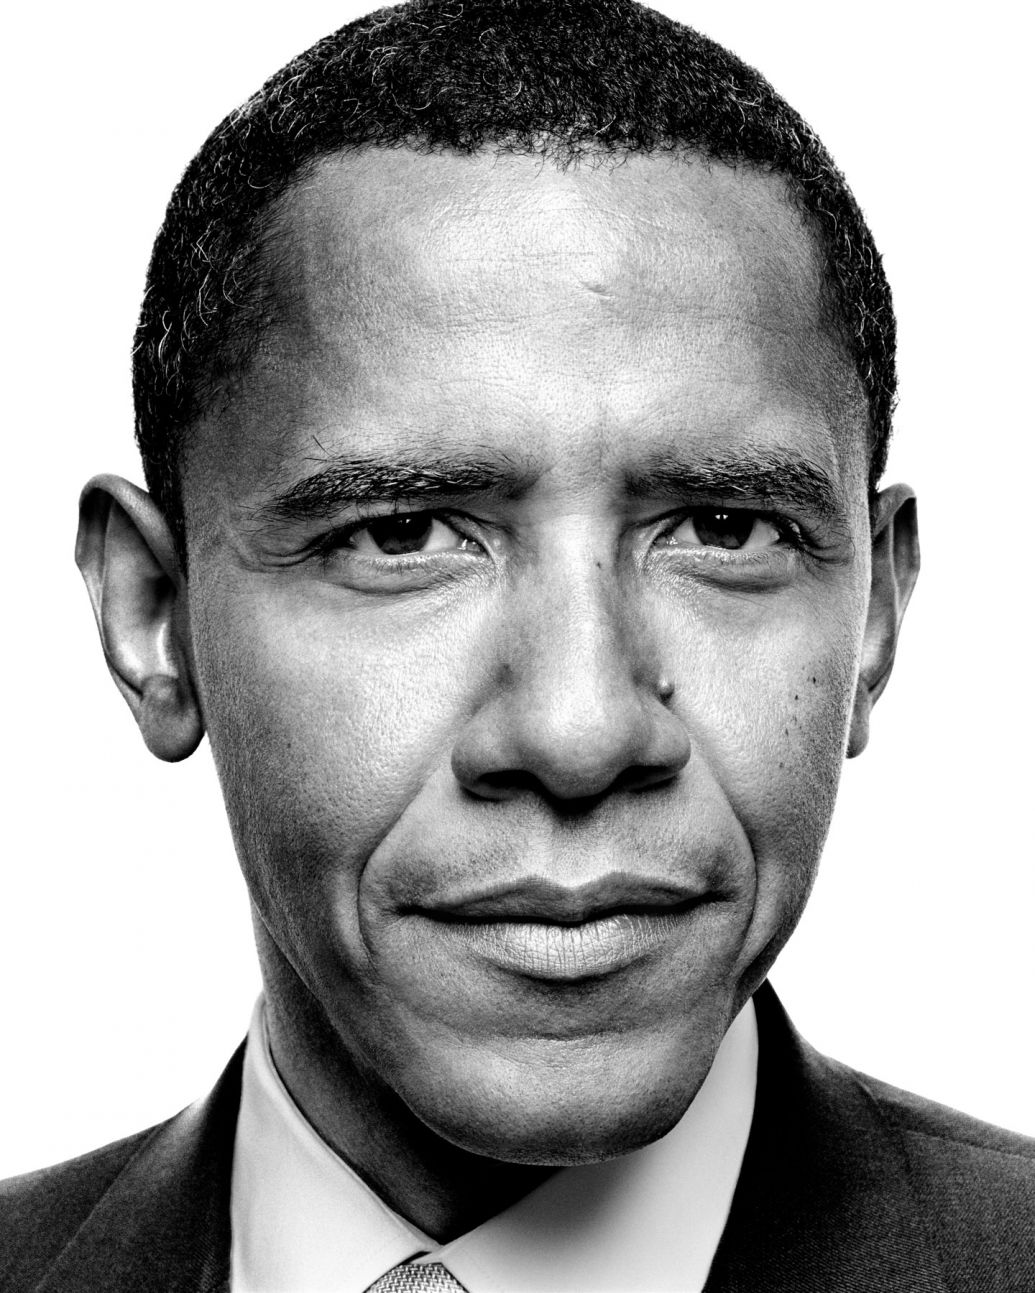 Barack Obama Portrait photography